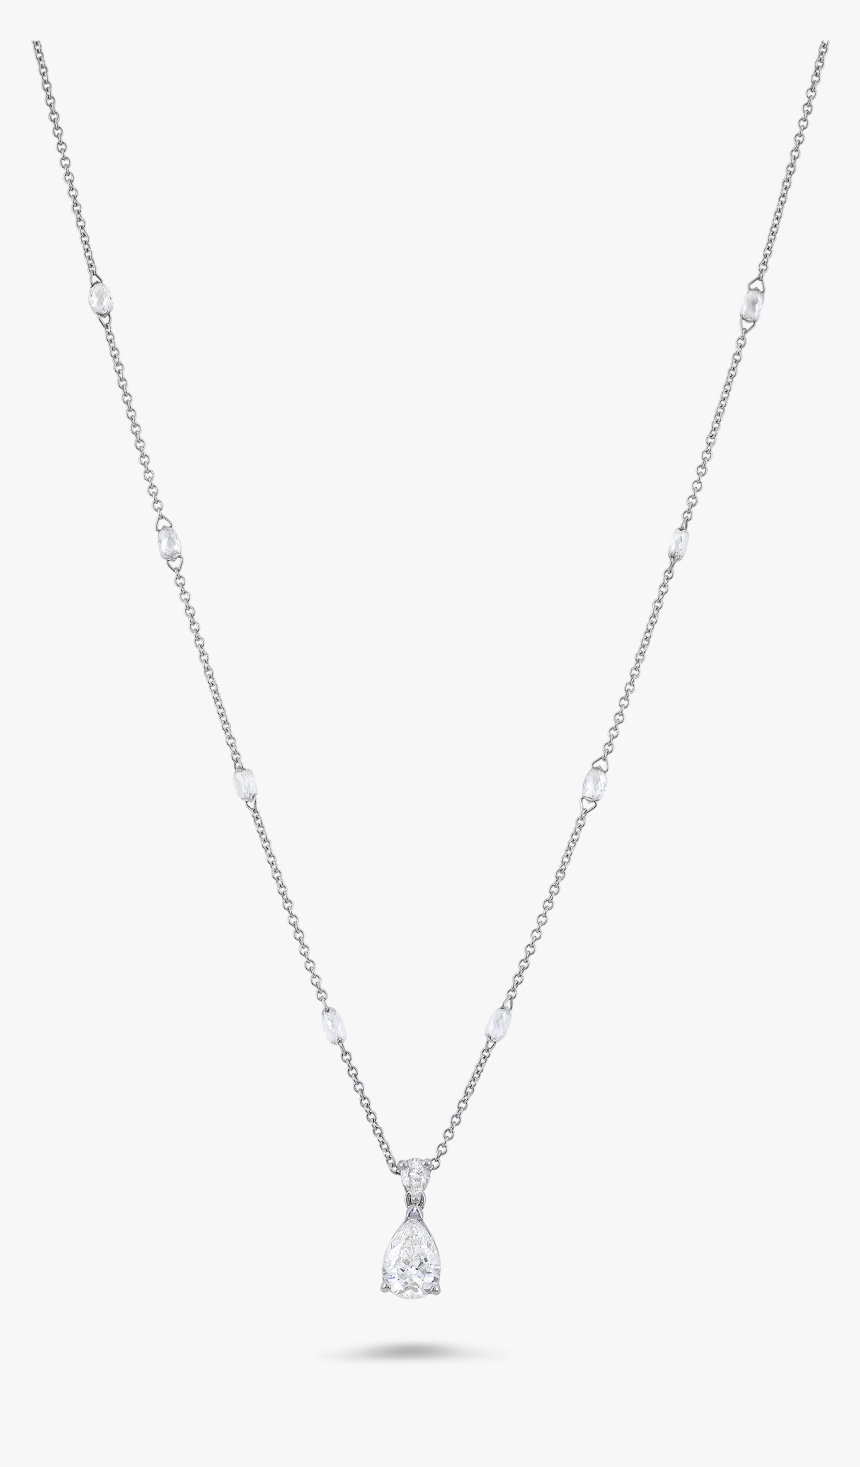 Beautiful Pear Cut Diamond Necklace - Locket